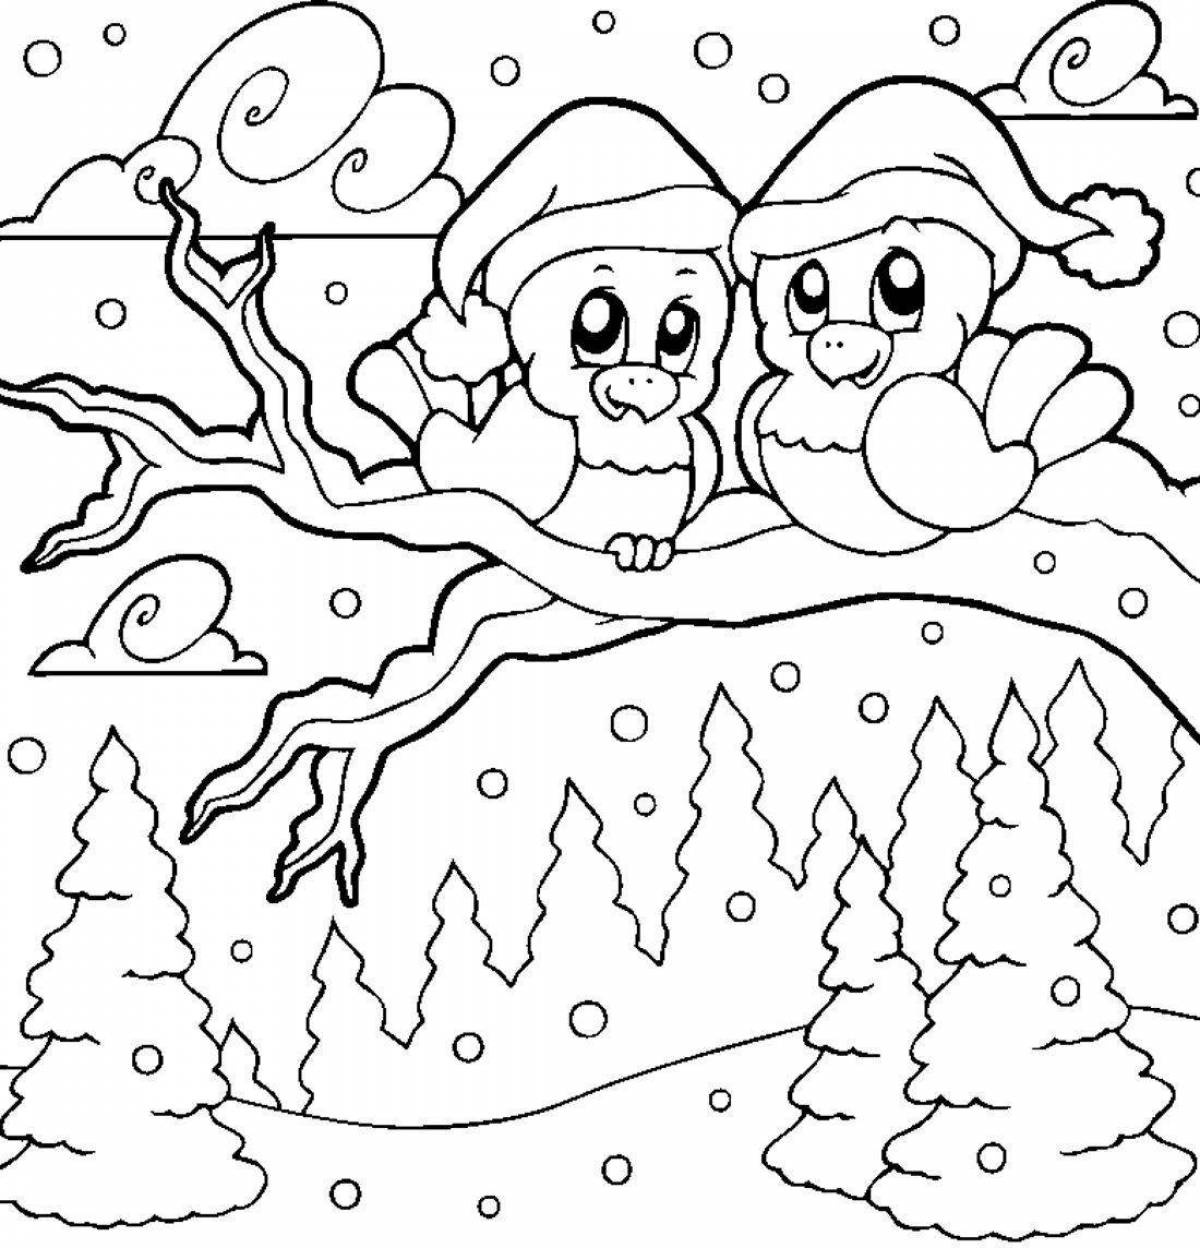 Innovative December coloring book for kids